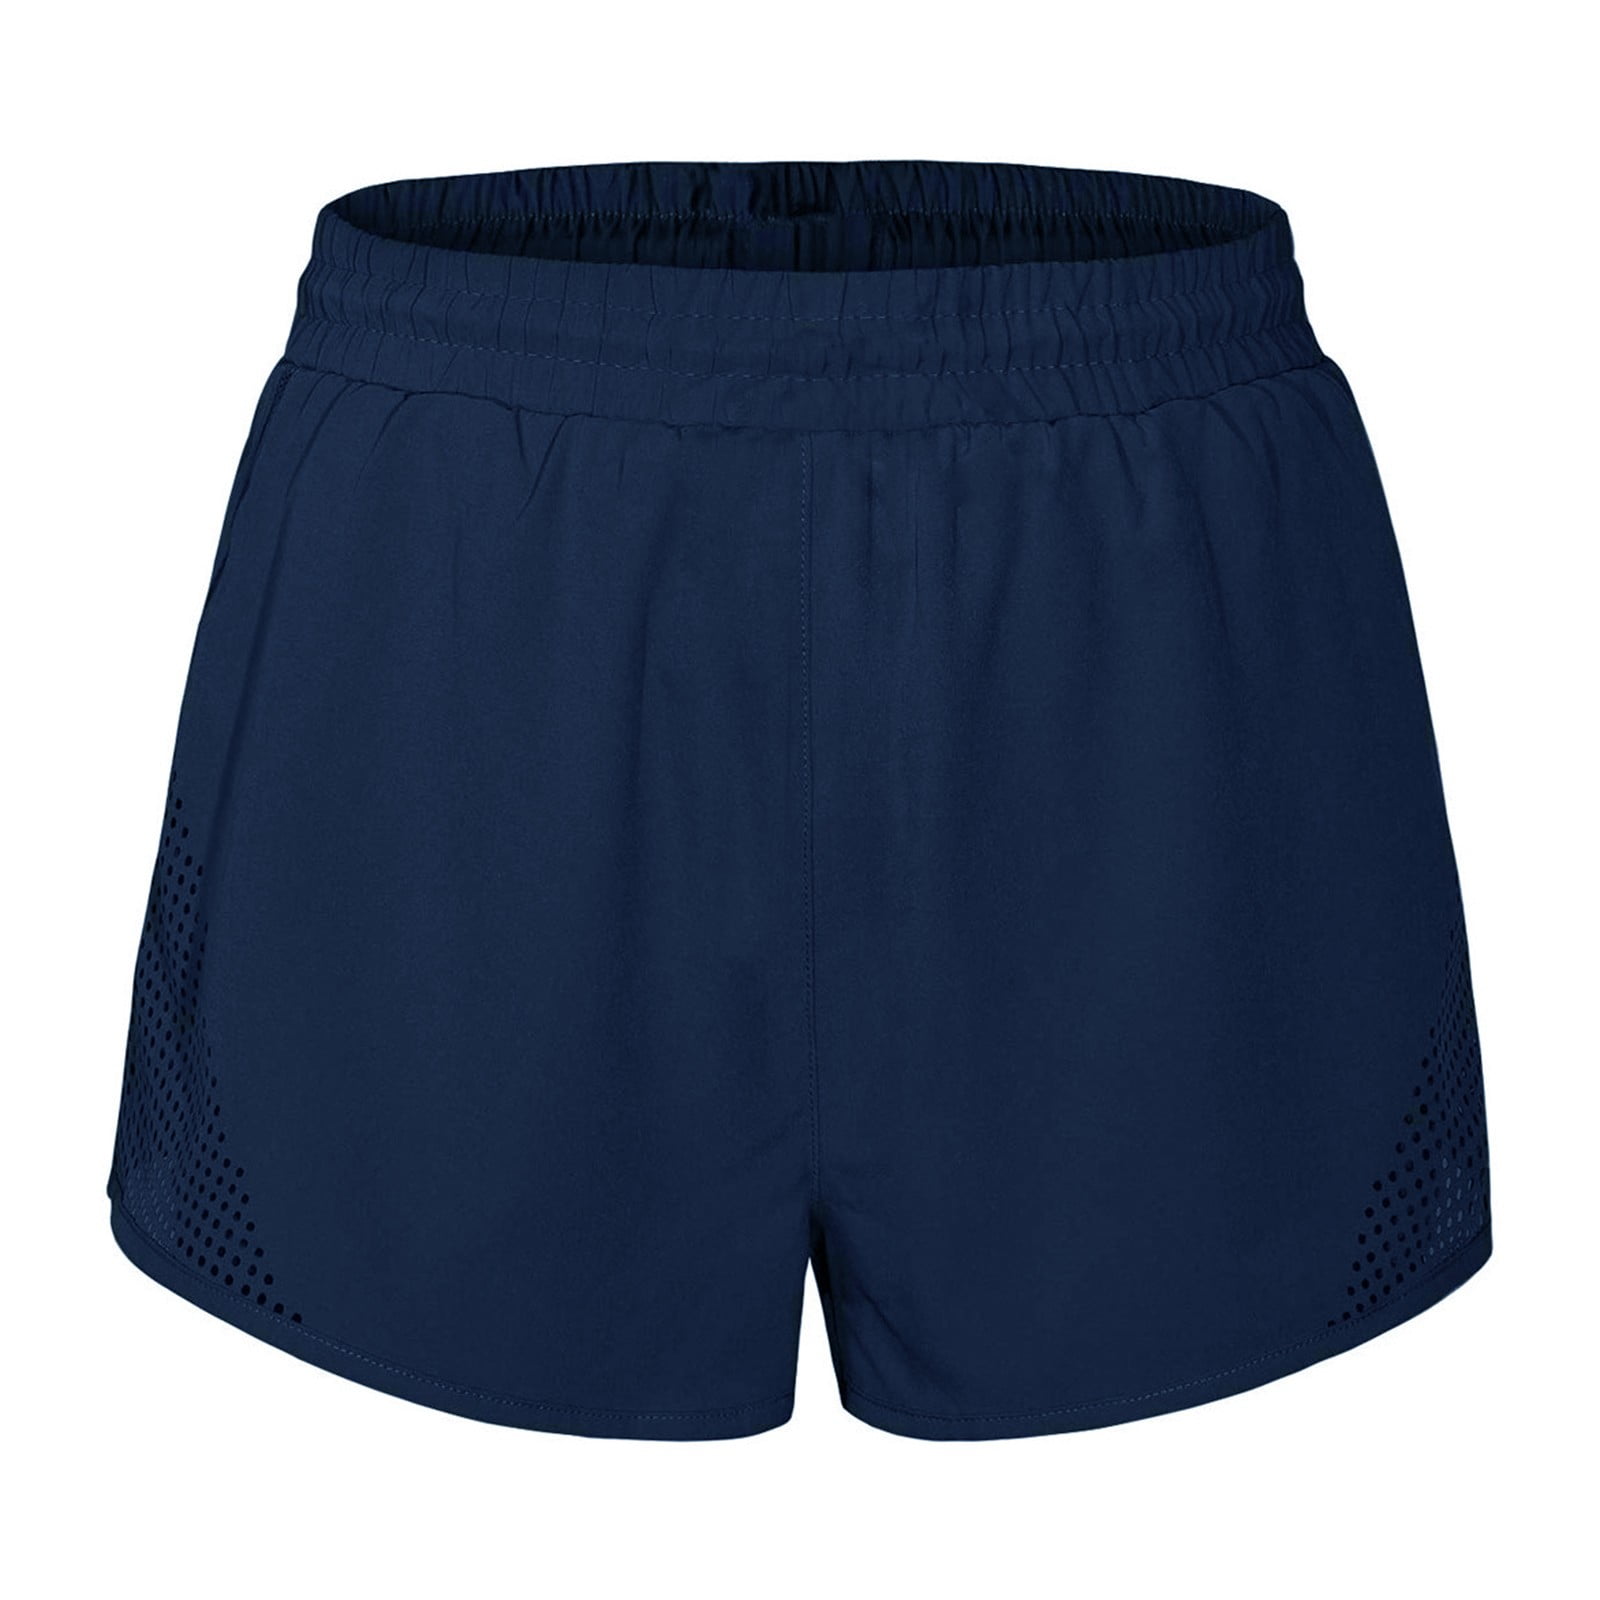 ZHAGHMIN Cute Shorts Shorts Pockets Yoga Shorts With Liner Wasit ...